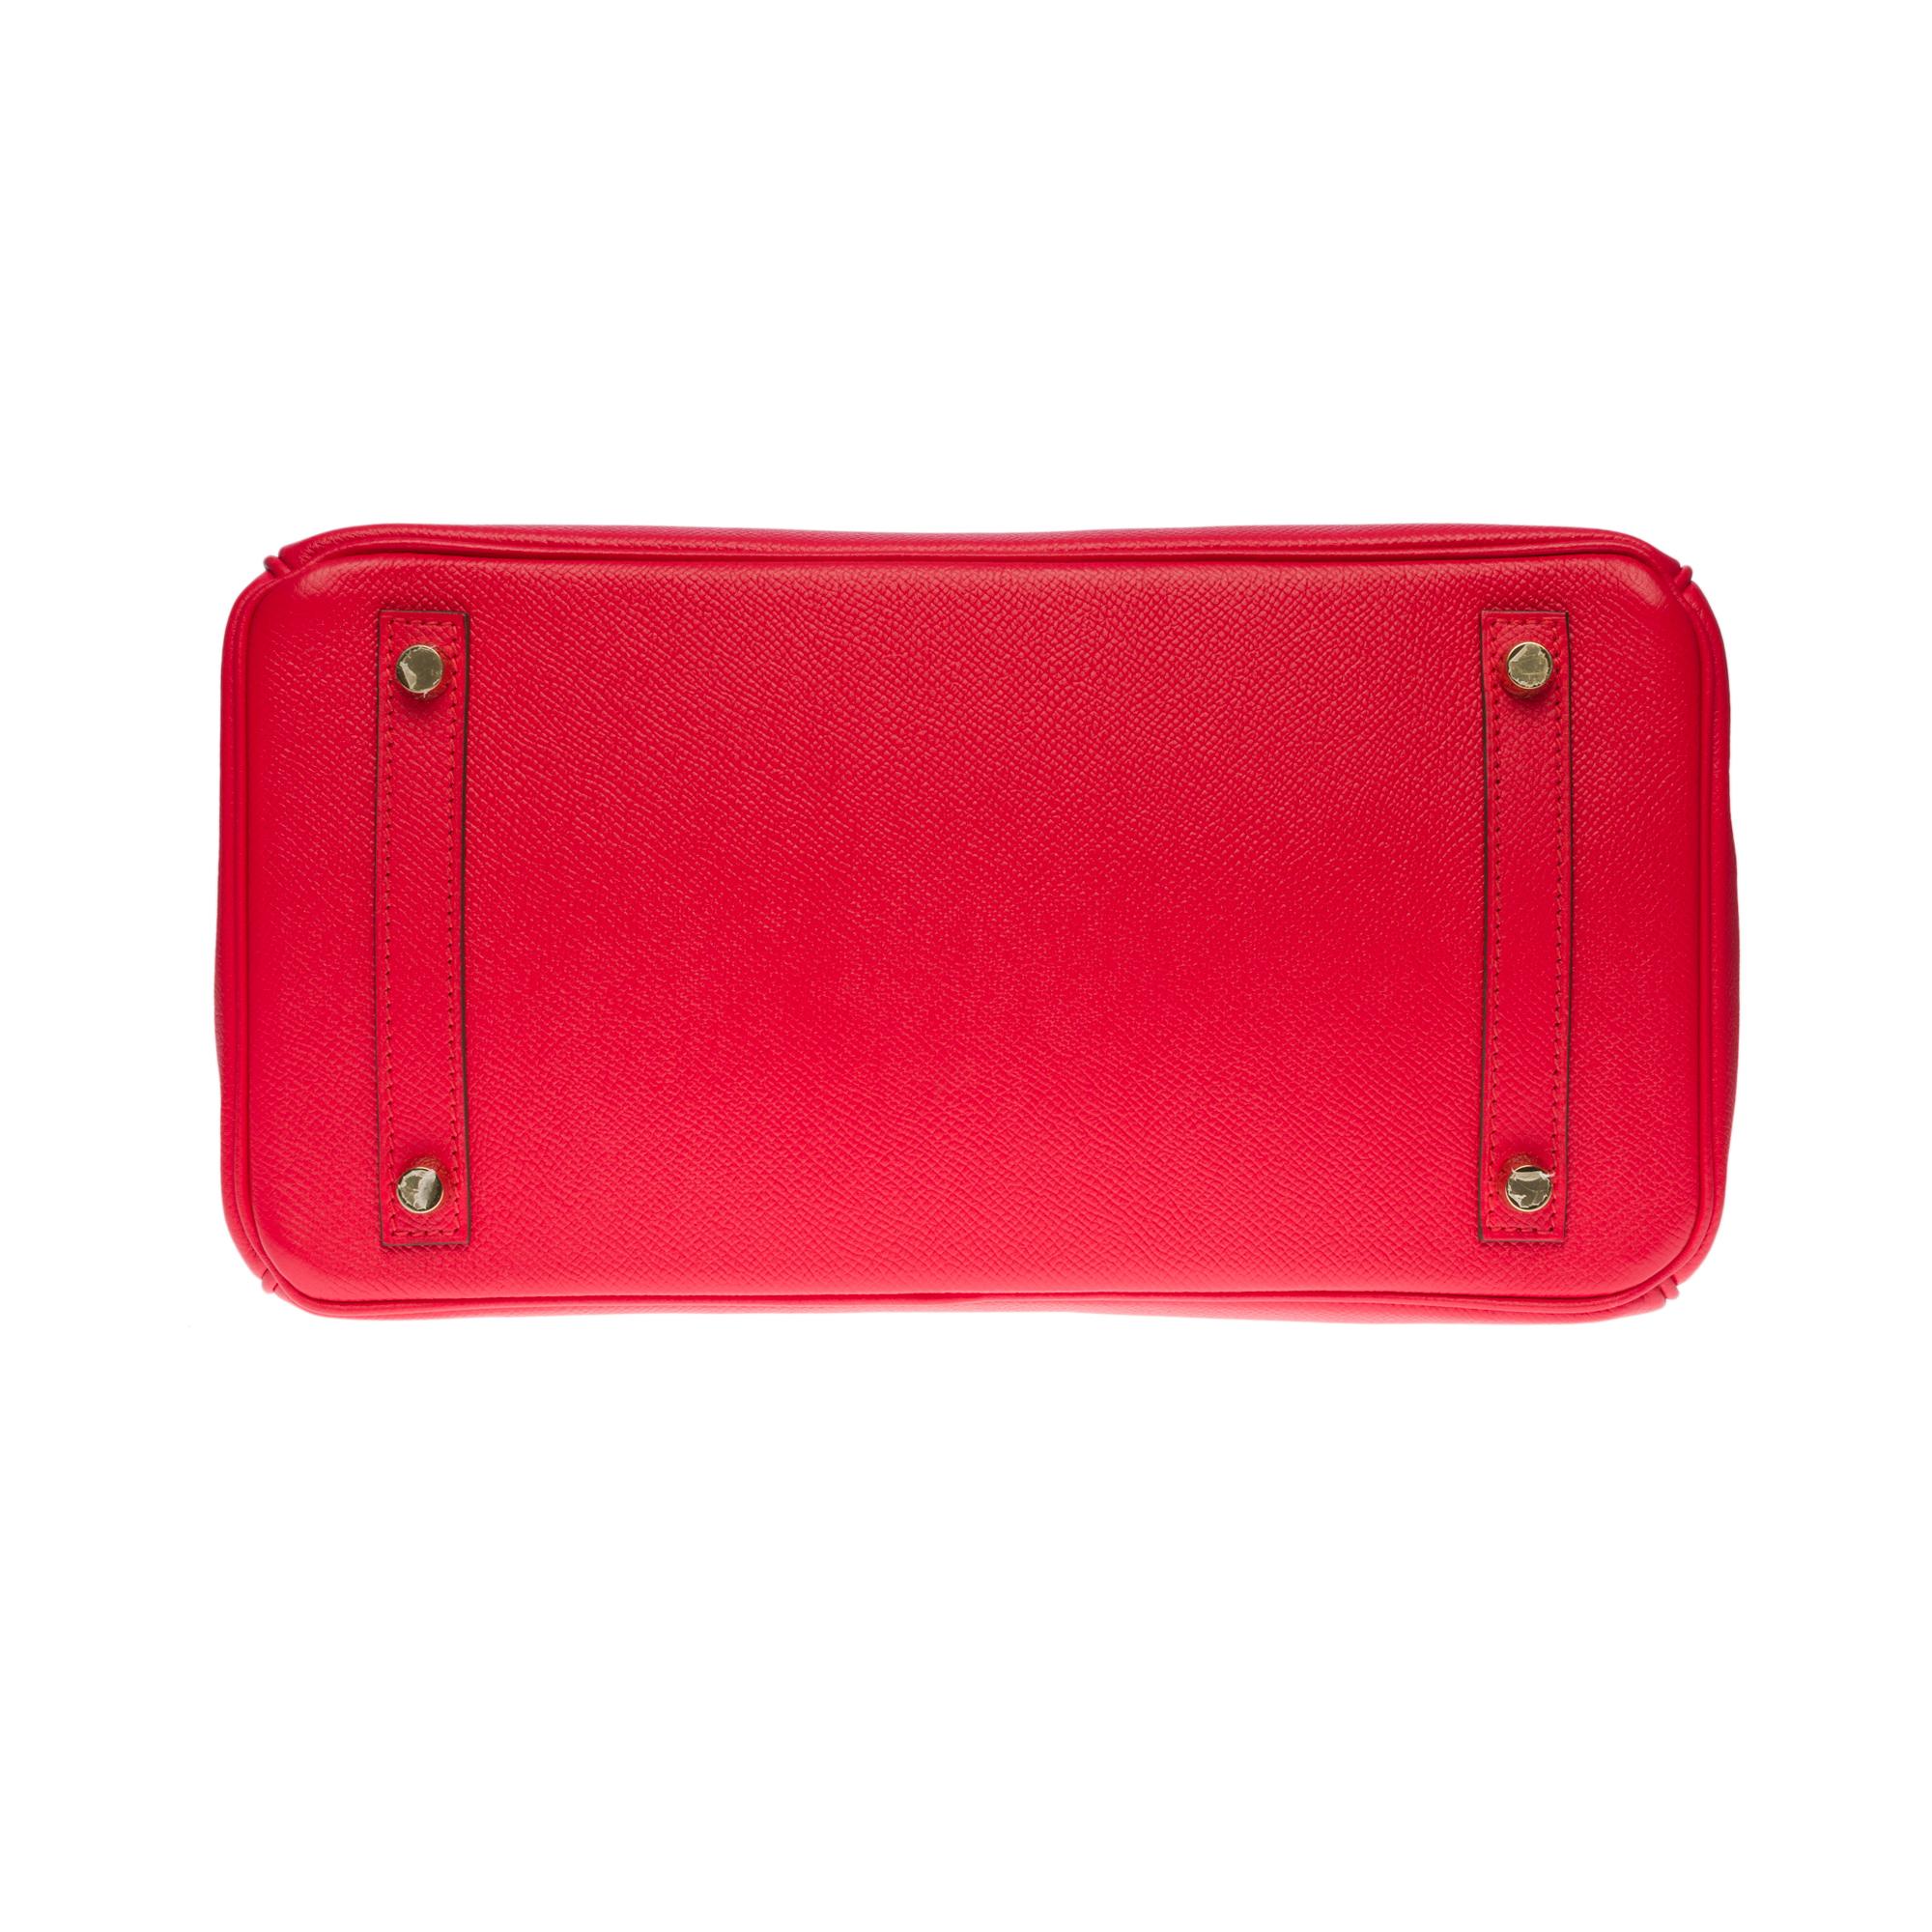 Stunning Hermès Birkin 30 handbag in Rouge de Coeur Epsom leather, GHW For Sale 5